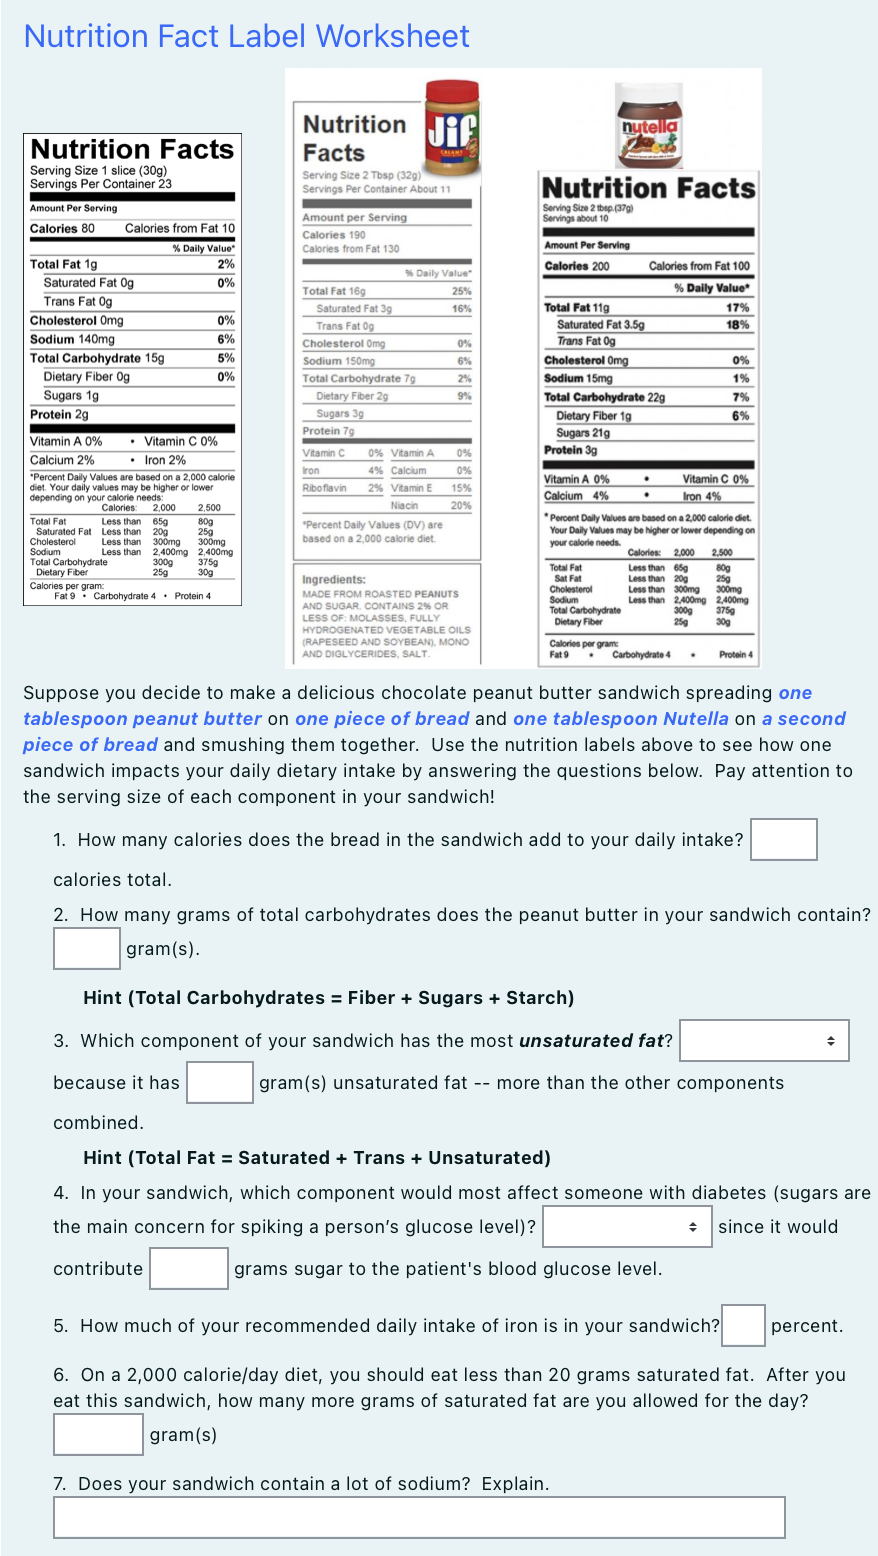 Solved Nutrition Fact Label Worksheet Nutrition Jif Facts  Chegg.com With Nutrition Label Worksheet Answer